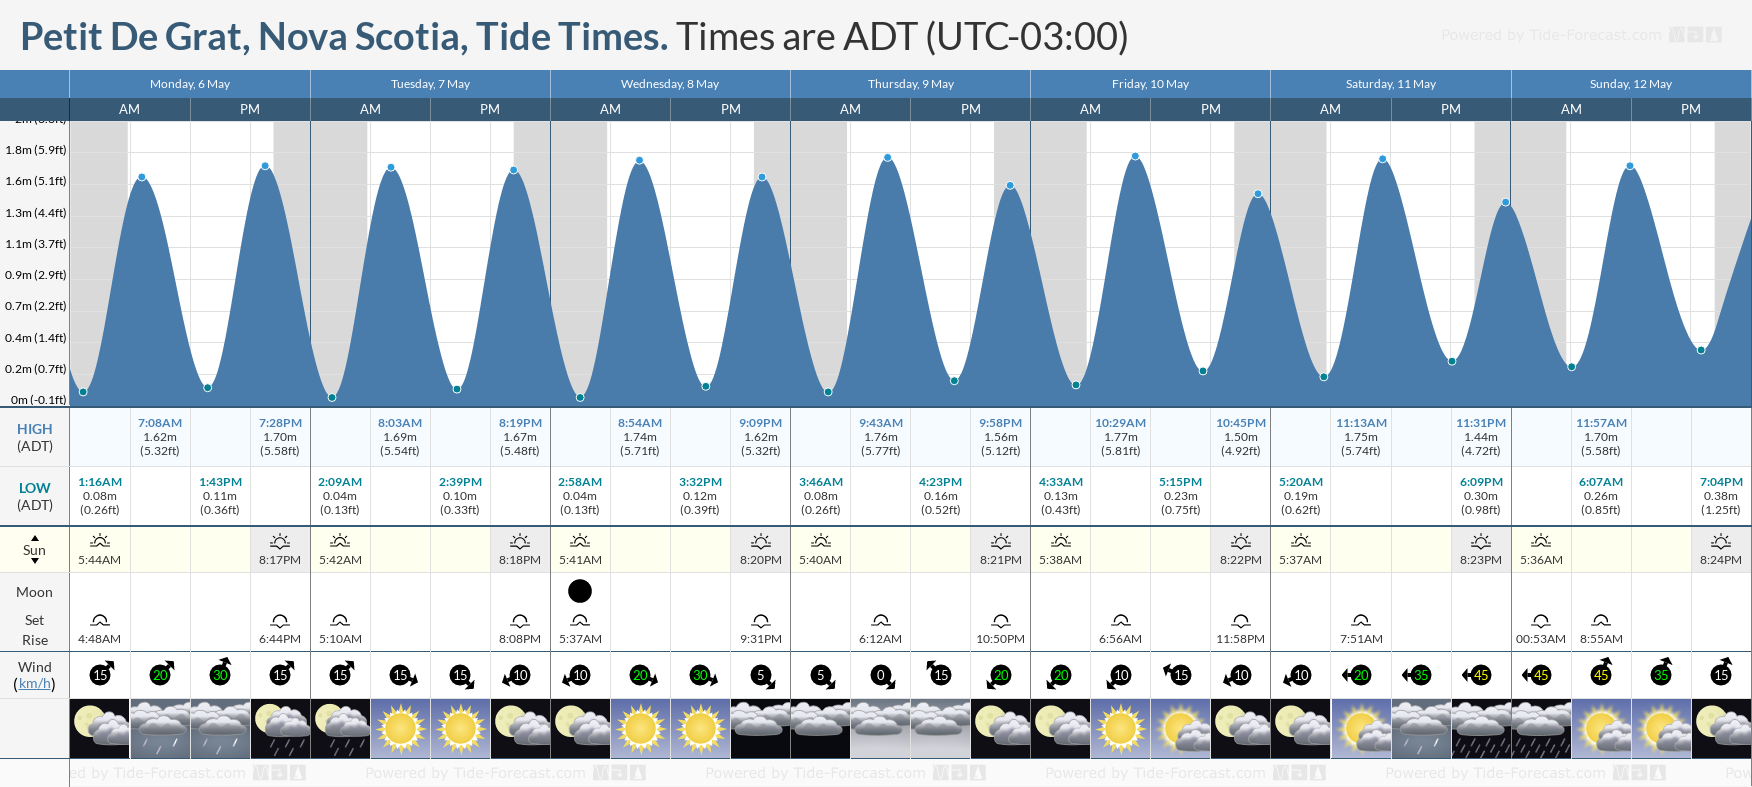 Petit De Grat, Nova Scotia Tide Chart including high and low tide tide times for the next 7 days